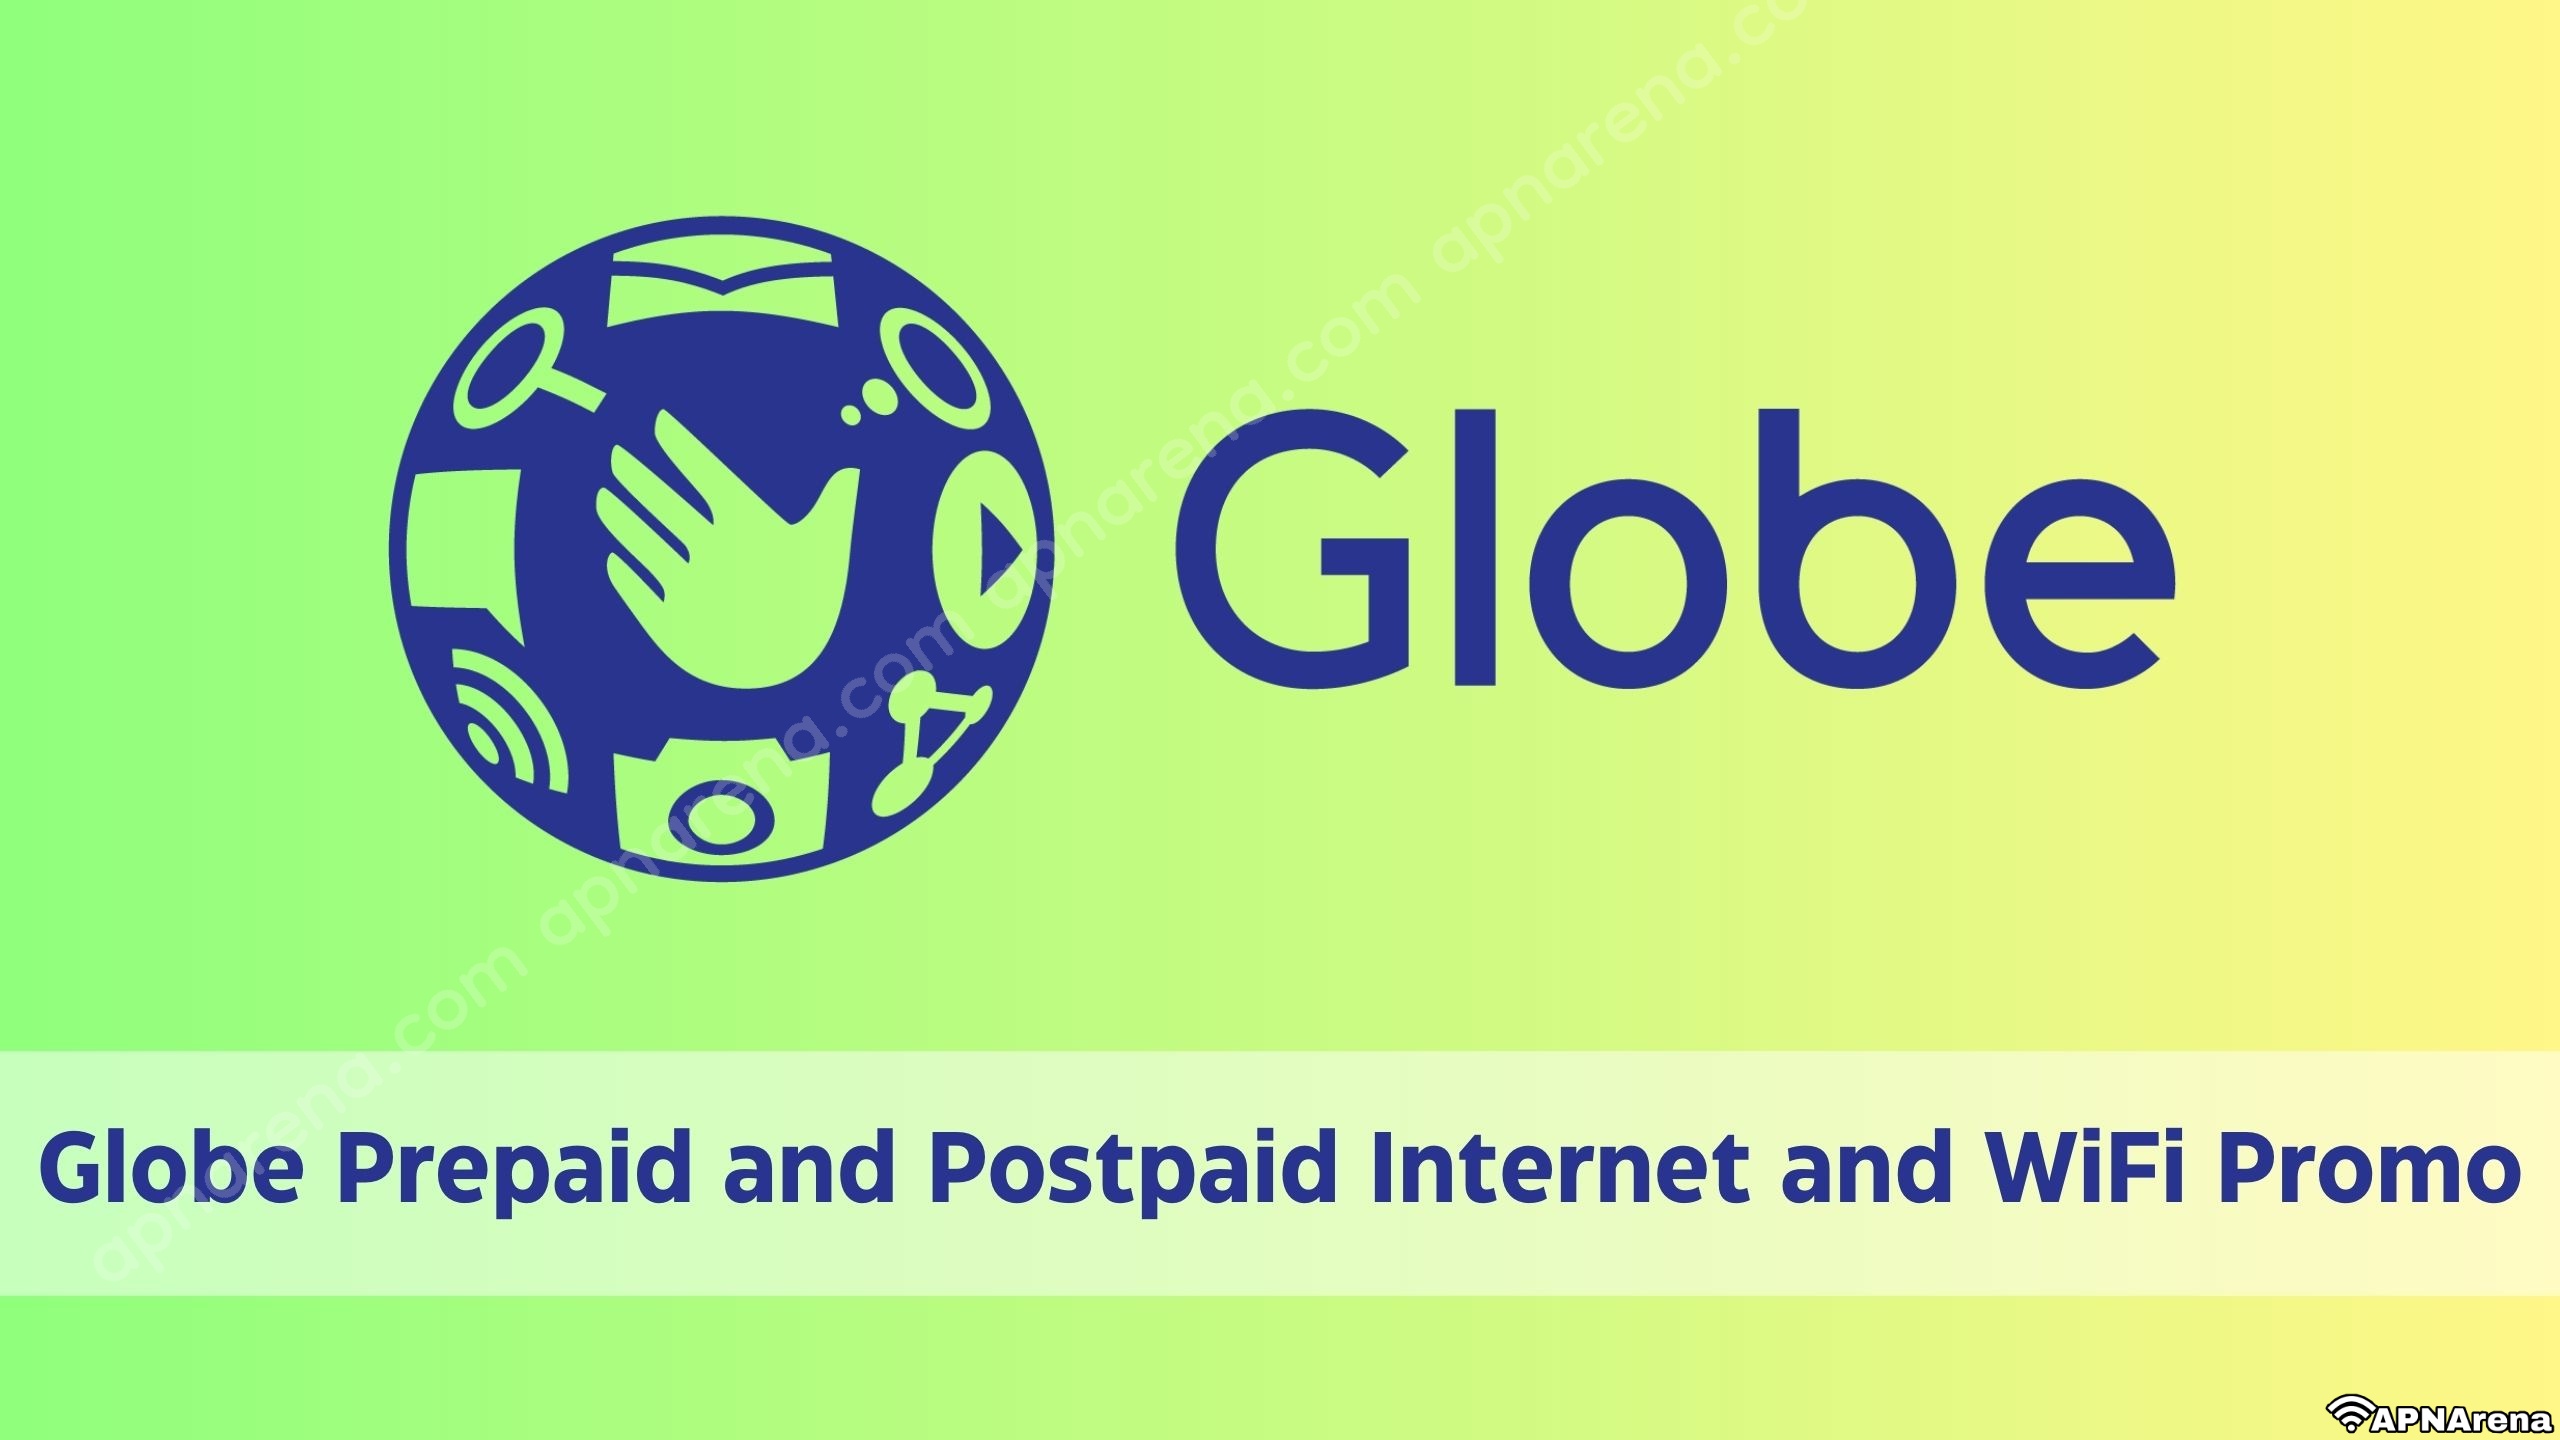 Globe Telecom Prepaid and Postpaid Internet and WiFi Promo including Surf4All, GoSakto, GoSurf, GoUnli, GPlan, GFiber and Family Data, and Broadband Plan